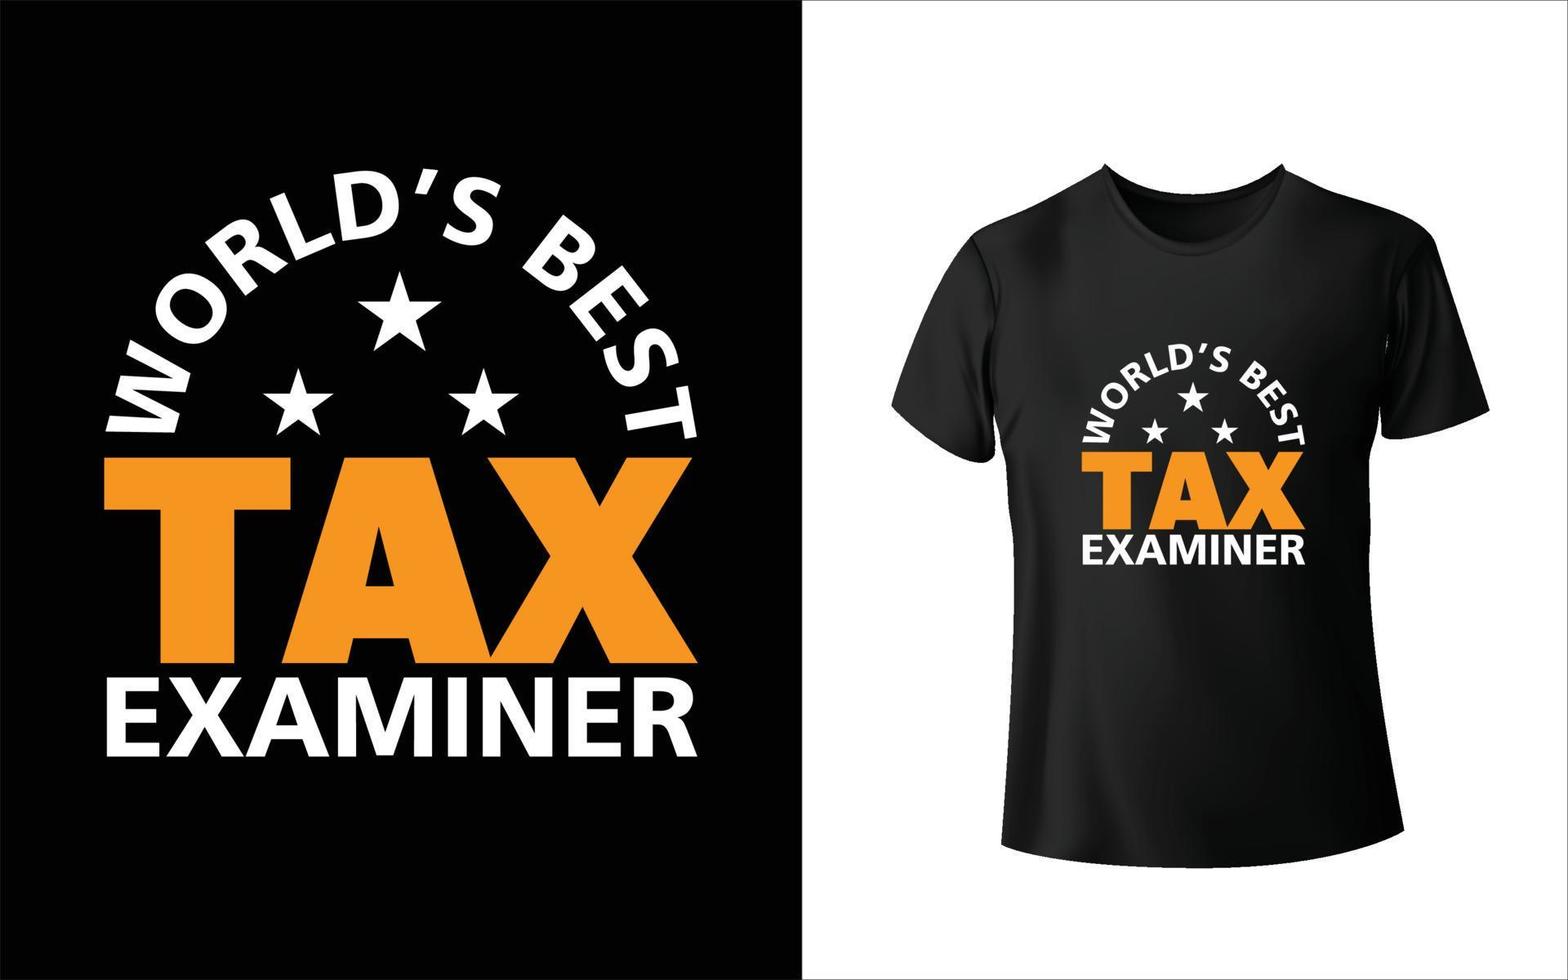 Worlds best tax examiner t shirt design vector